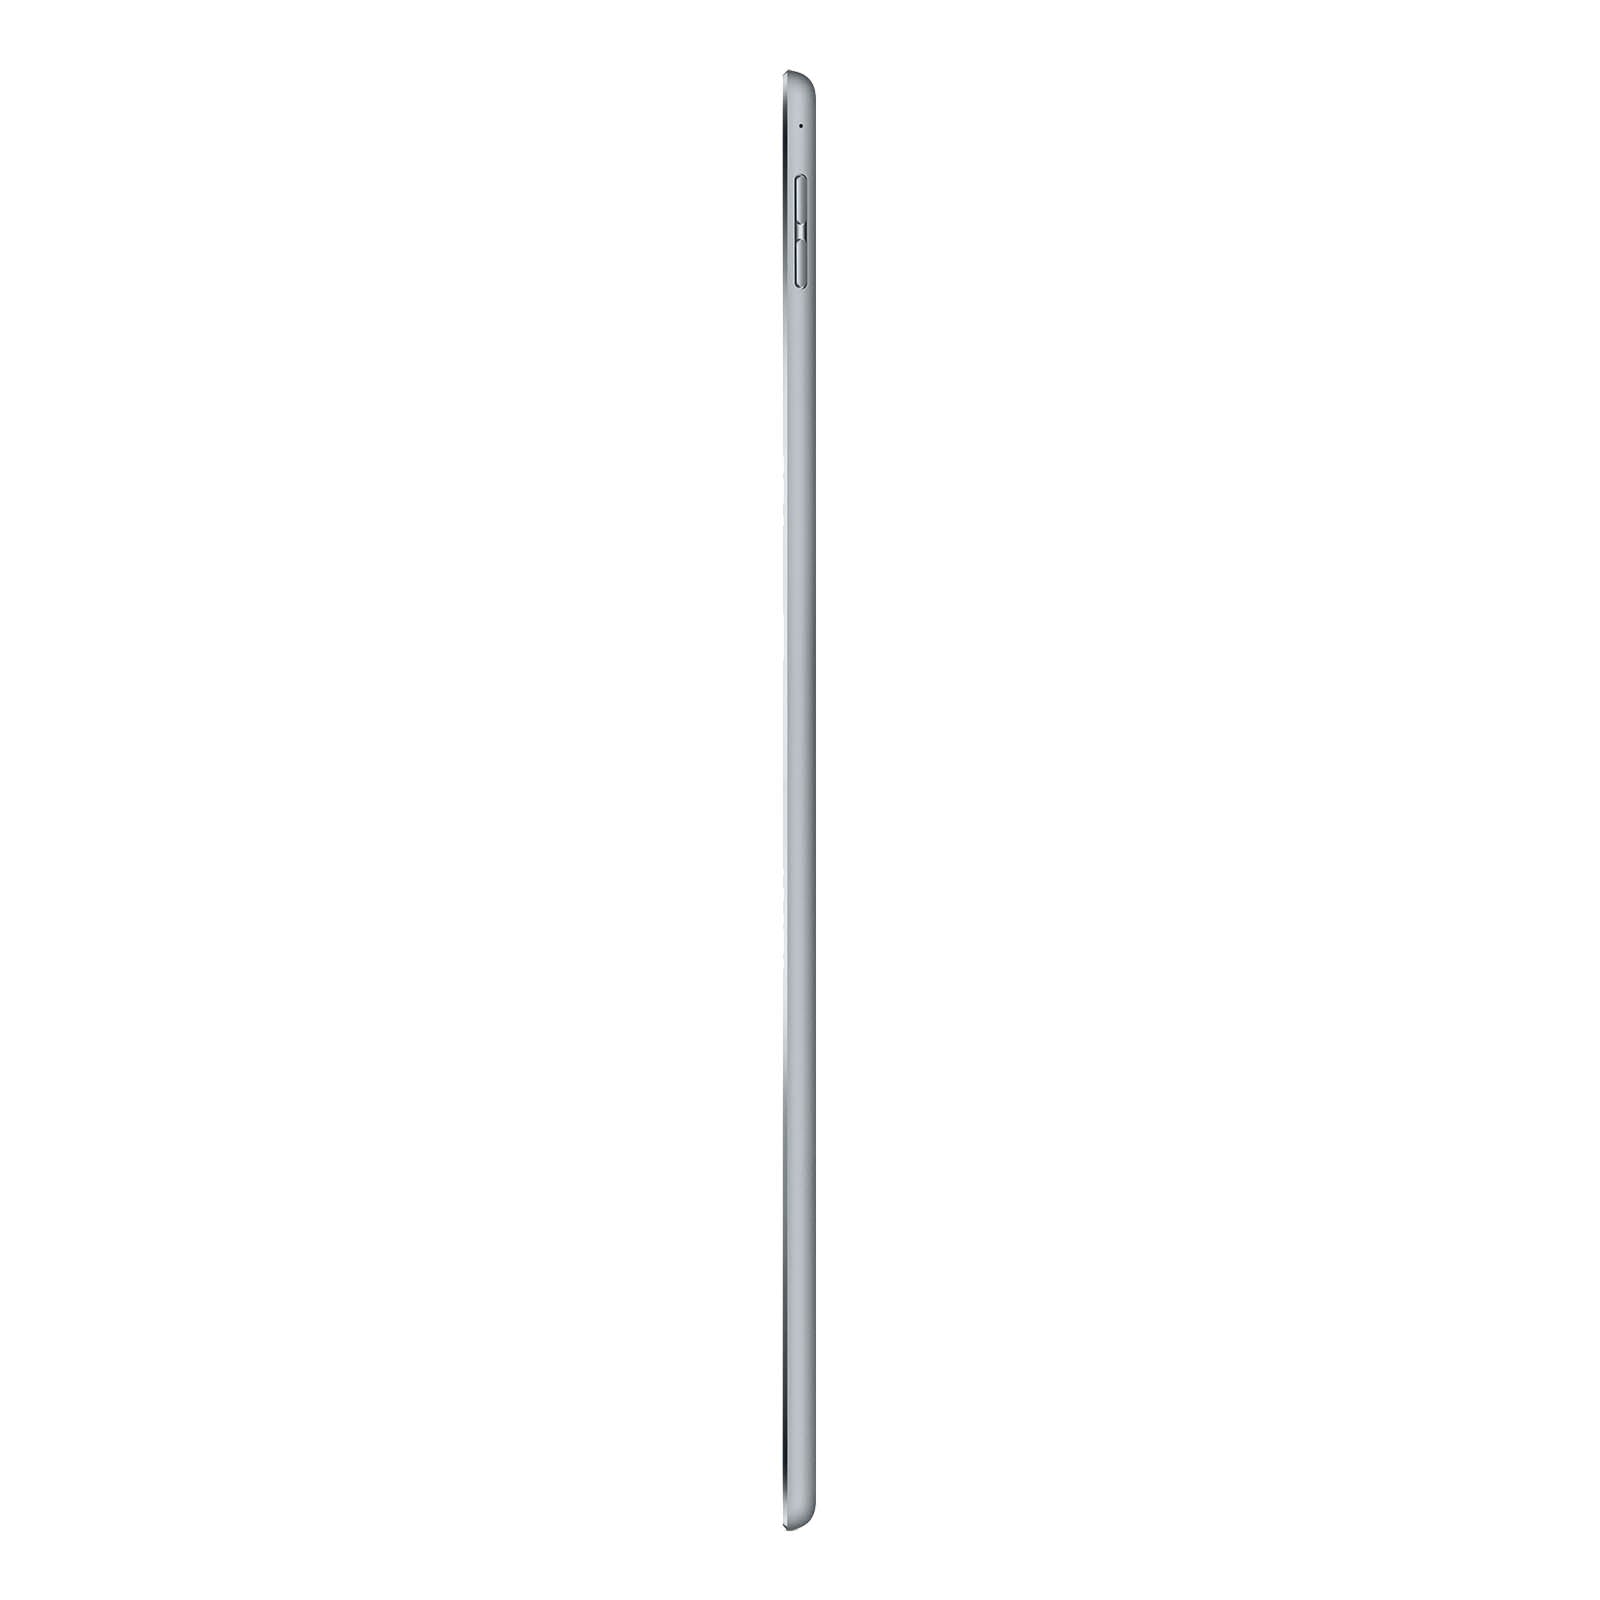 iPad Pro 12.9 Inch 2nd Gen 512GB Space Grey Pristine - WiFi